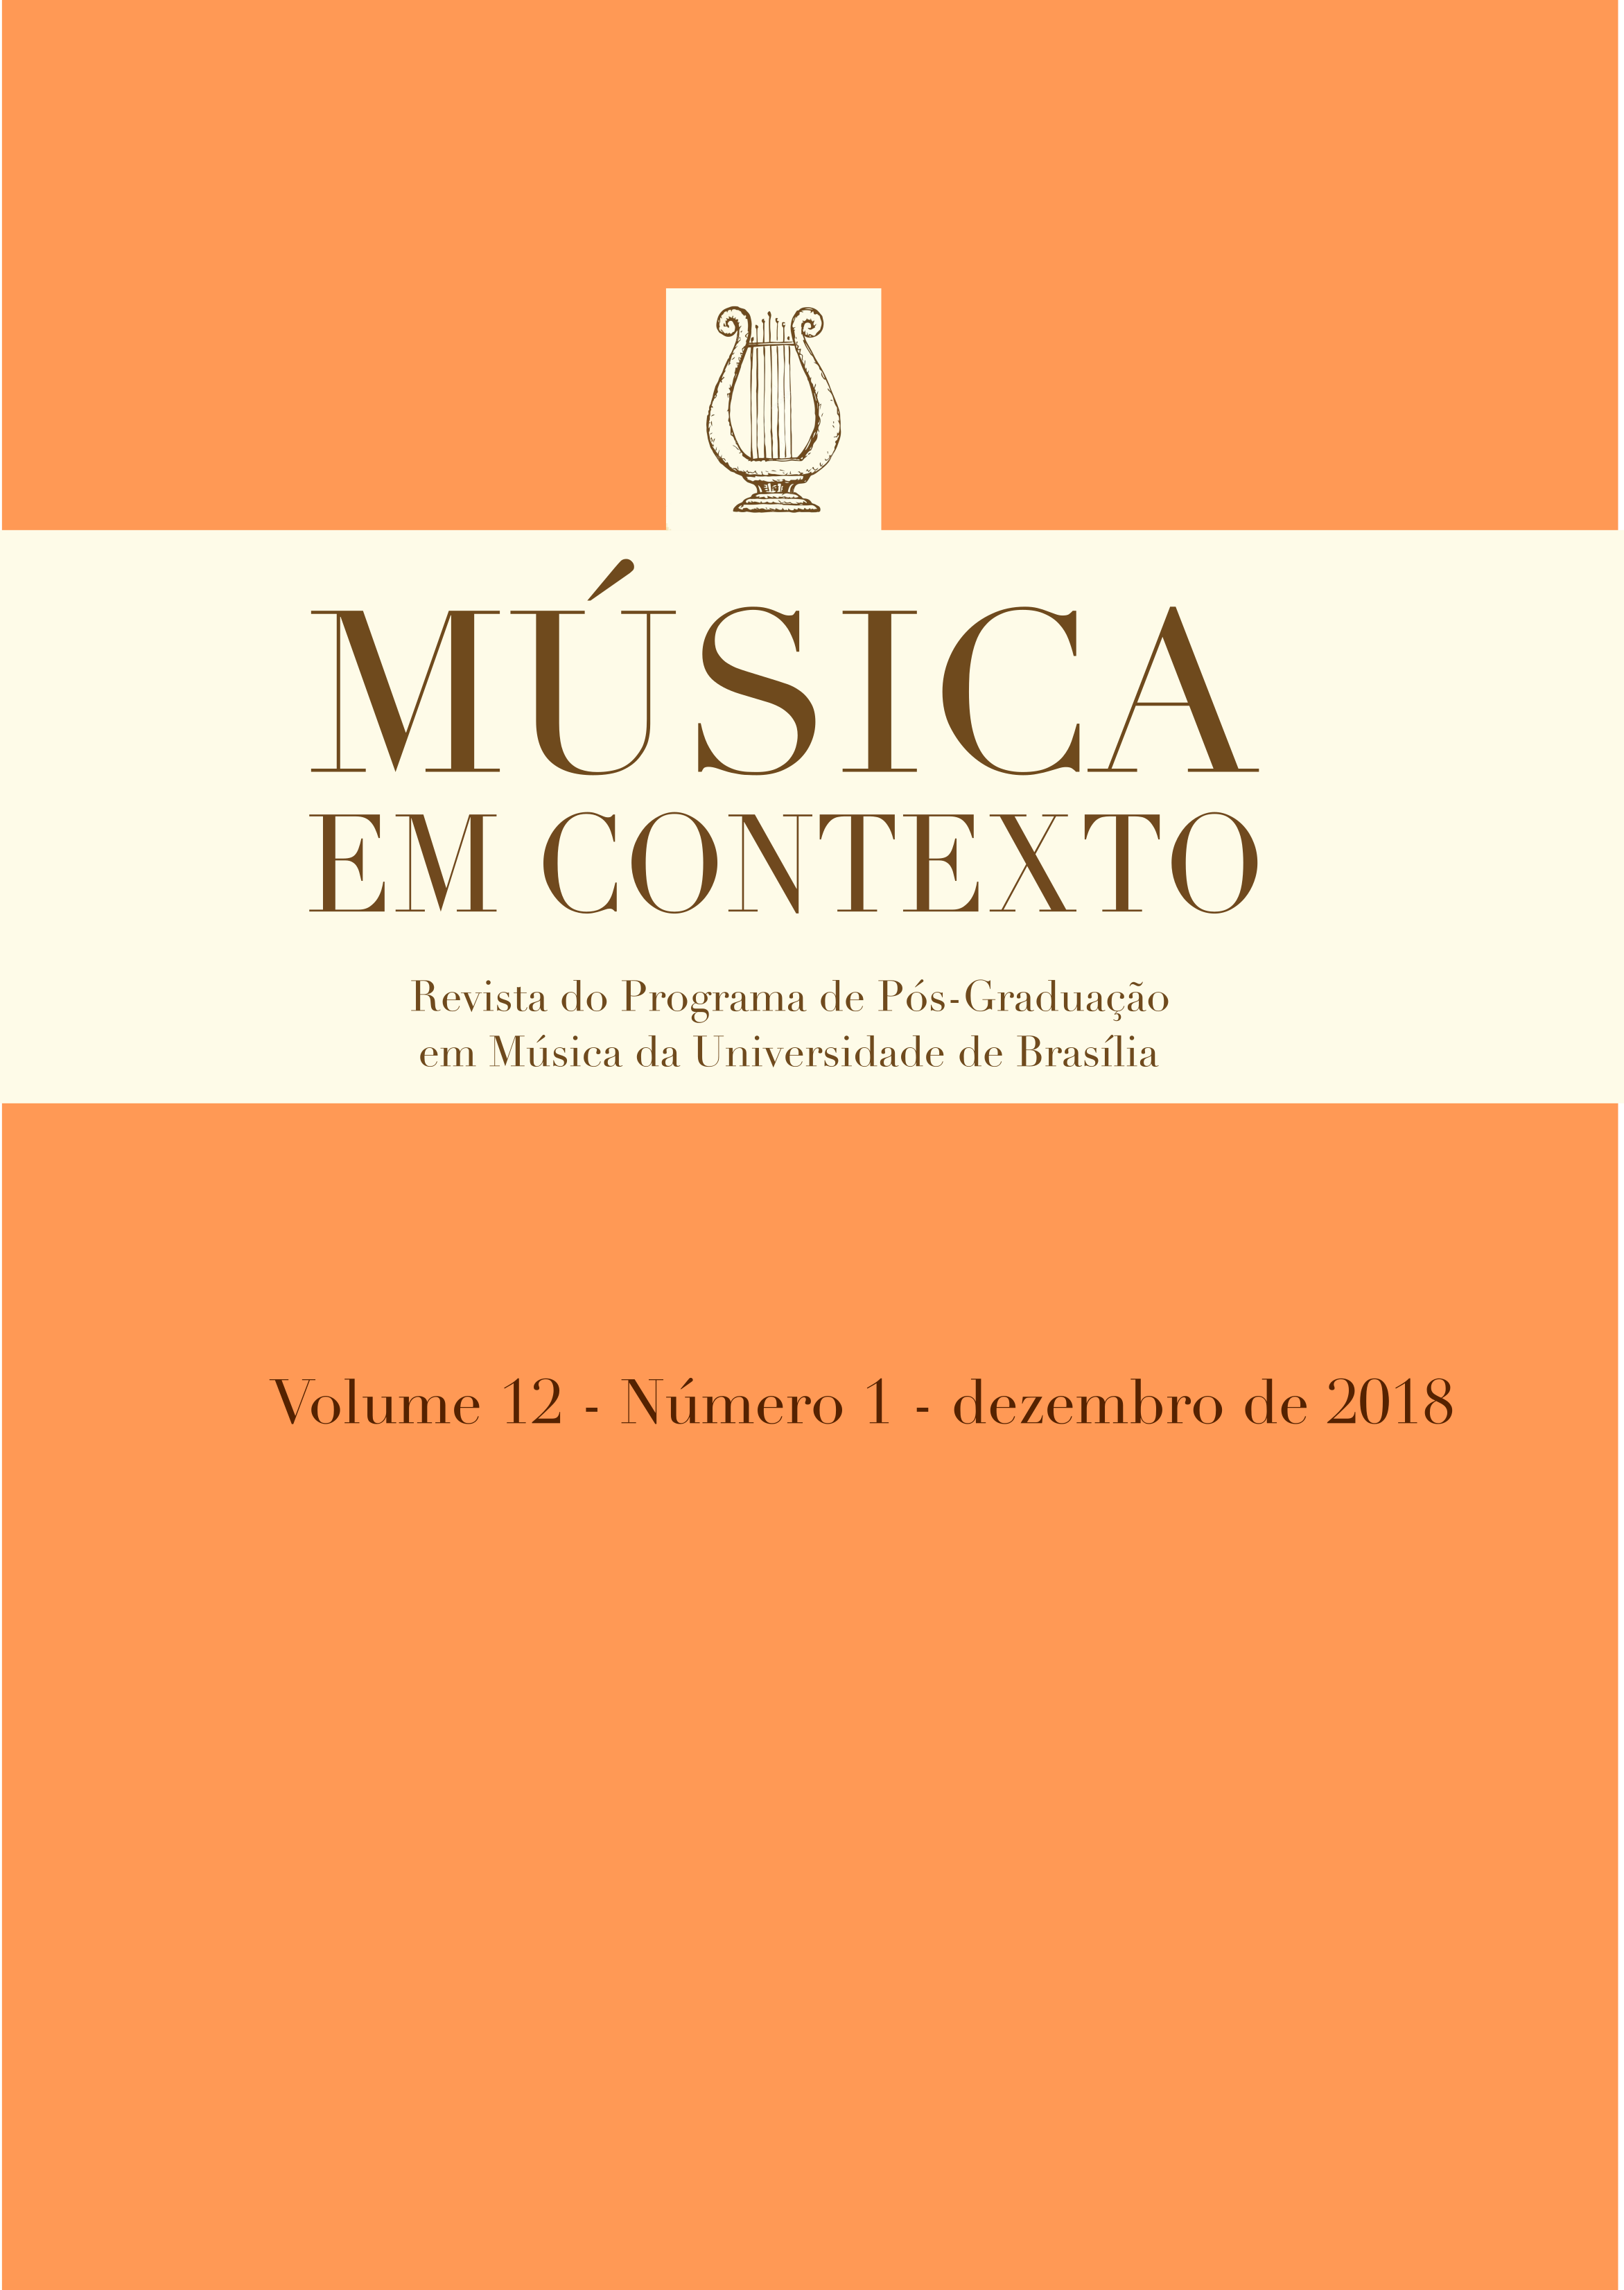 Capa do periódico Música em Contexto, volume 12, número 1, dezembro de 2018